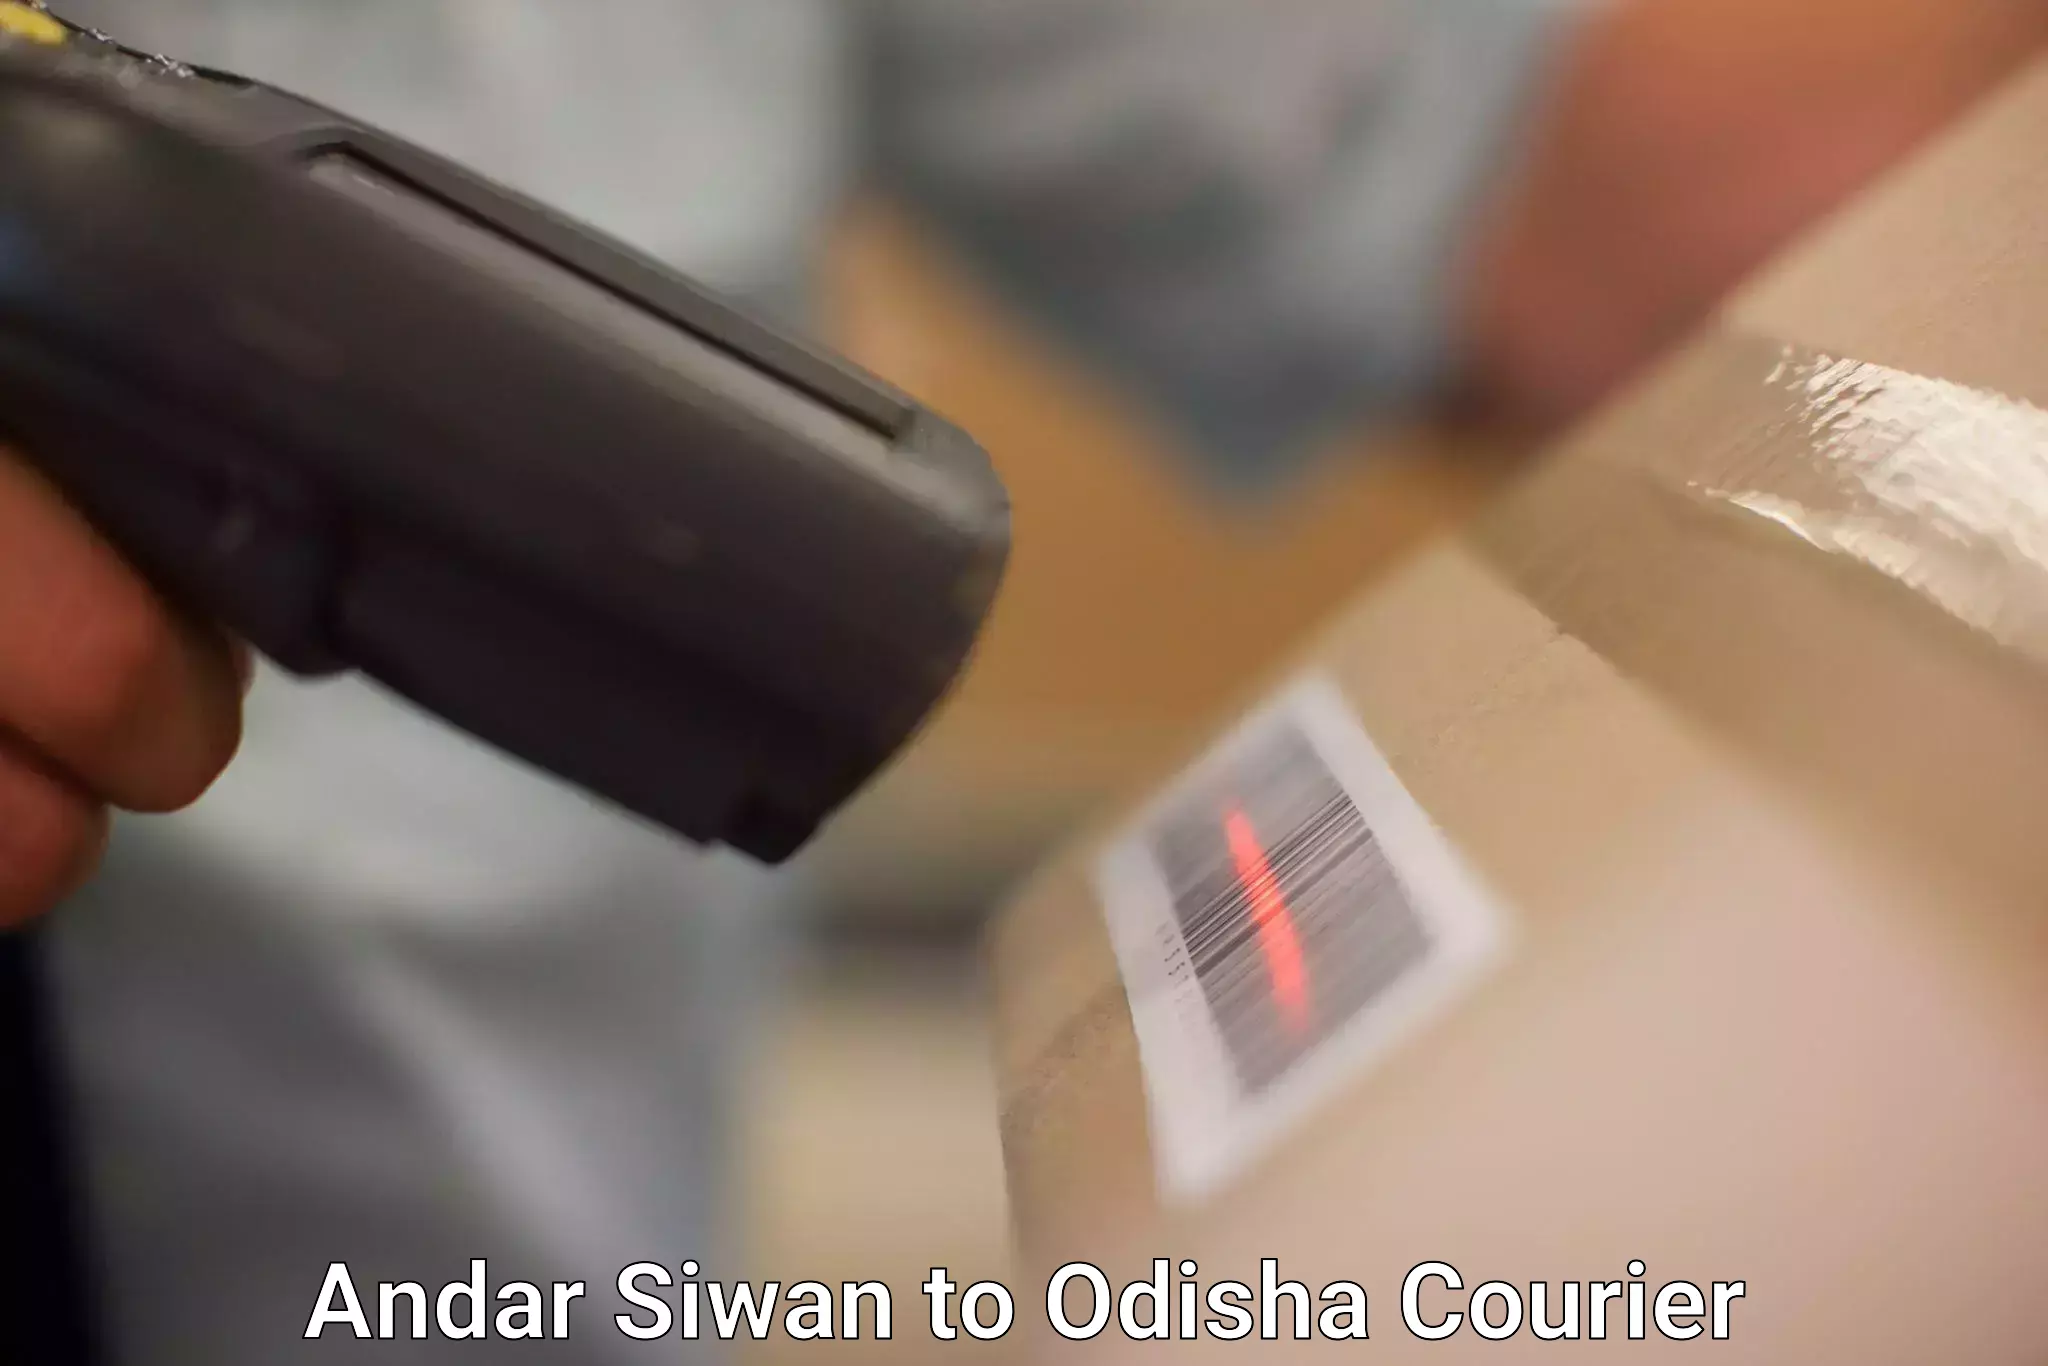 Easy return solutions Andar Siwan to Odisha